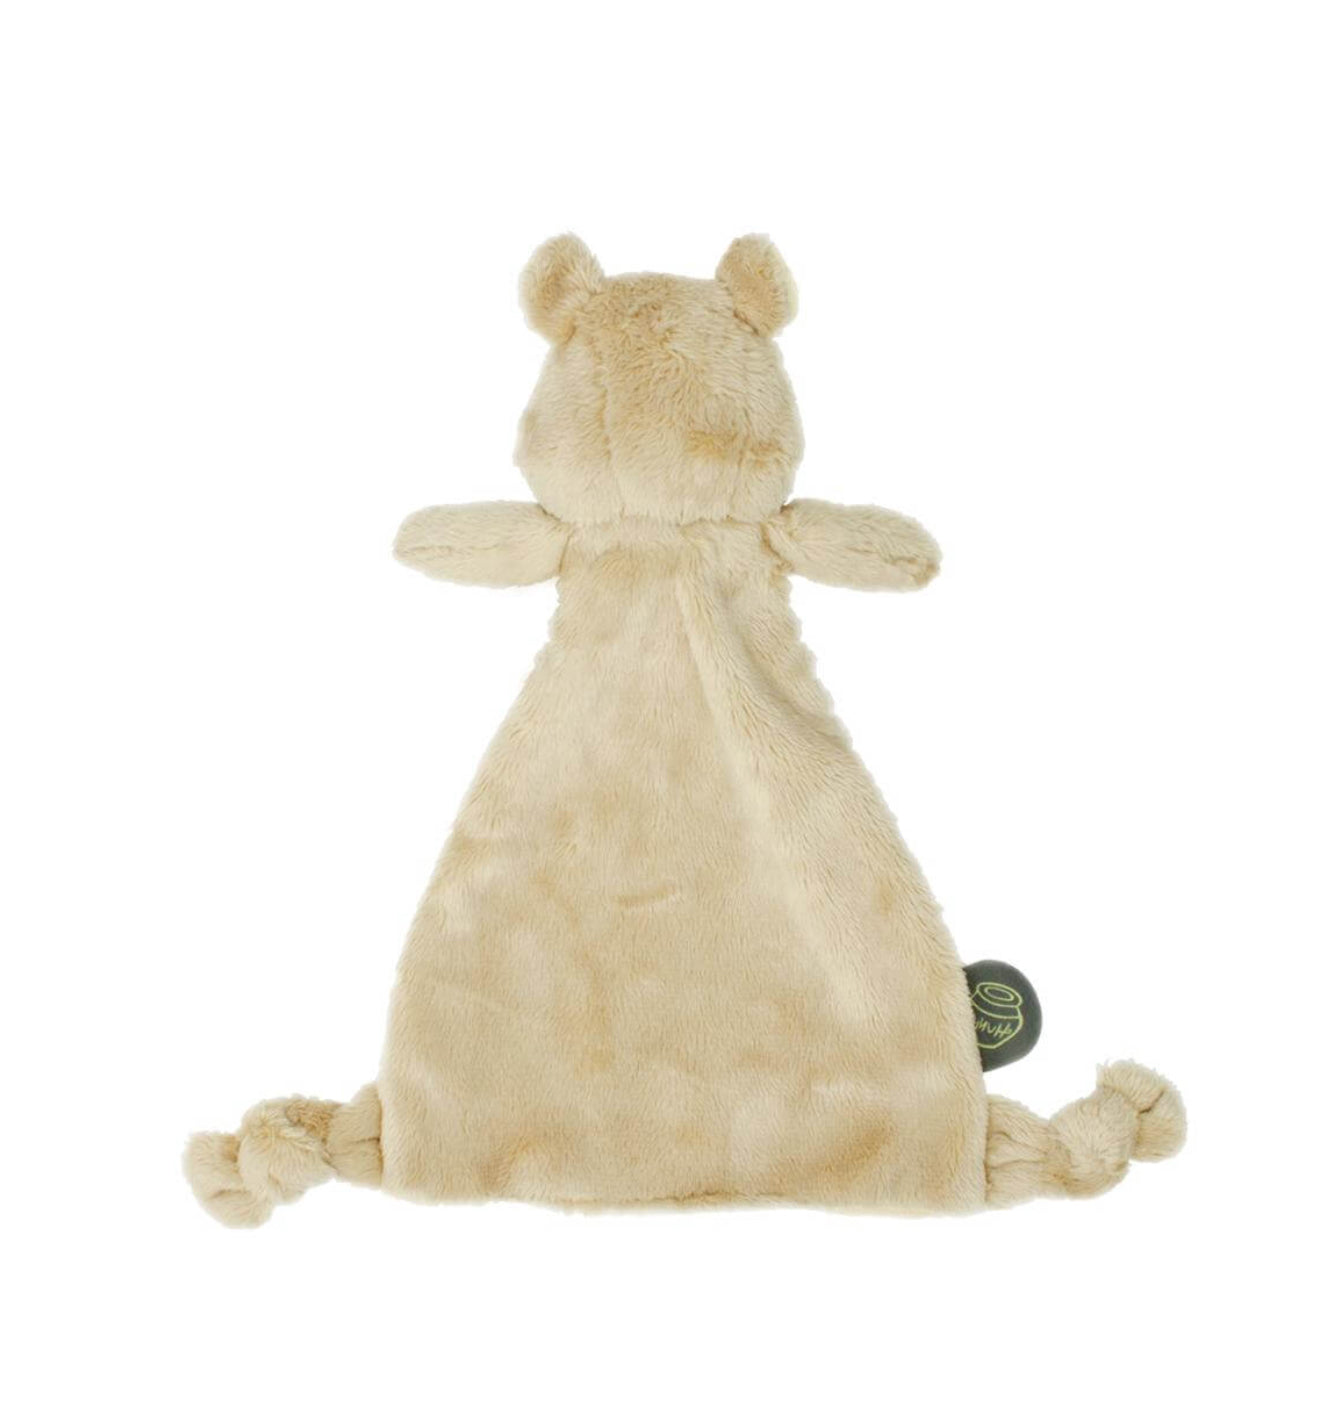 Classic Pooh Rattle & Comforter Gift Set Rainbow Toys